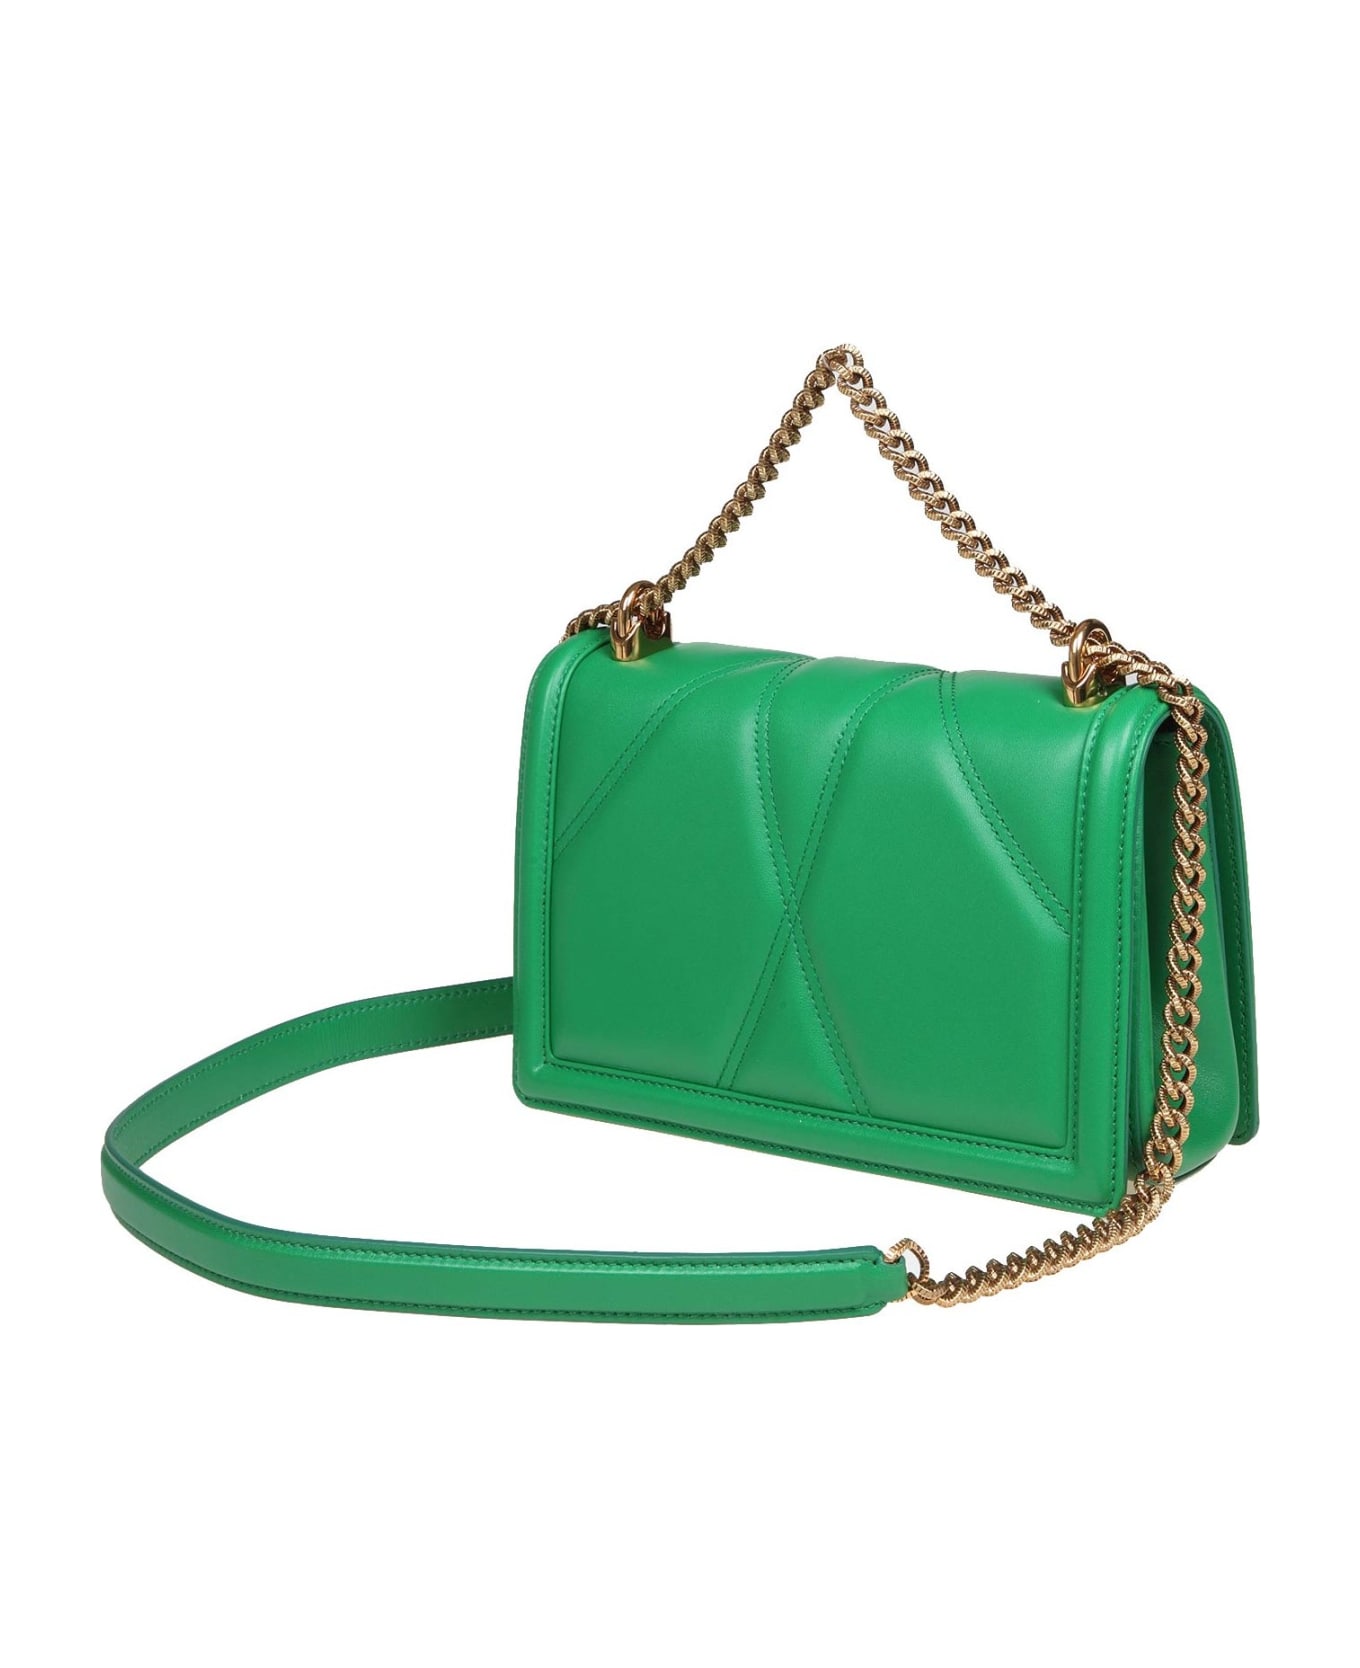 Dolce & Gabbana Devotion Bag - Green ショルダーバッグ